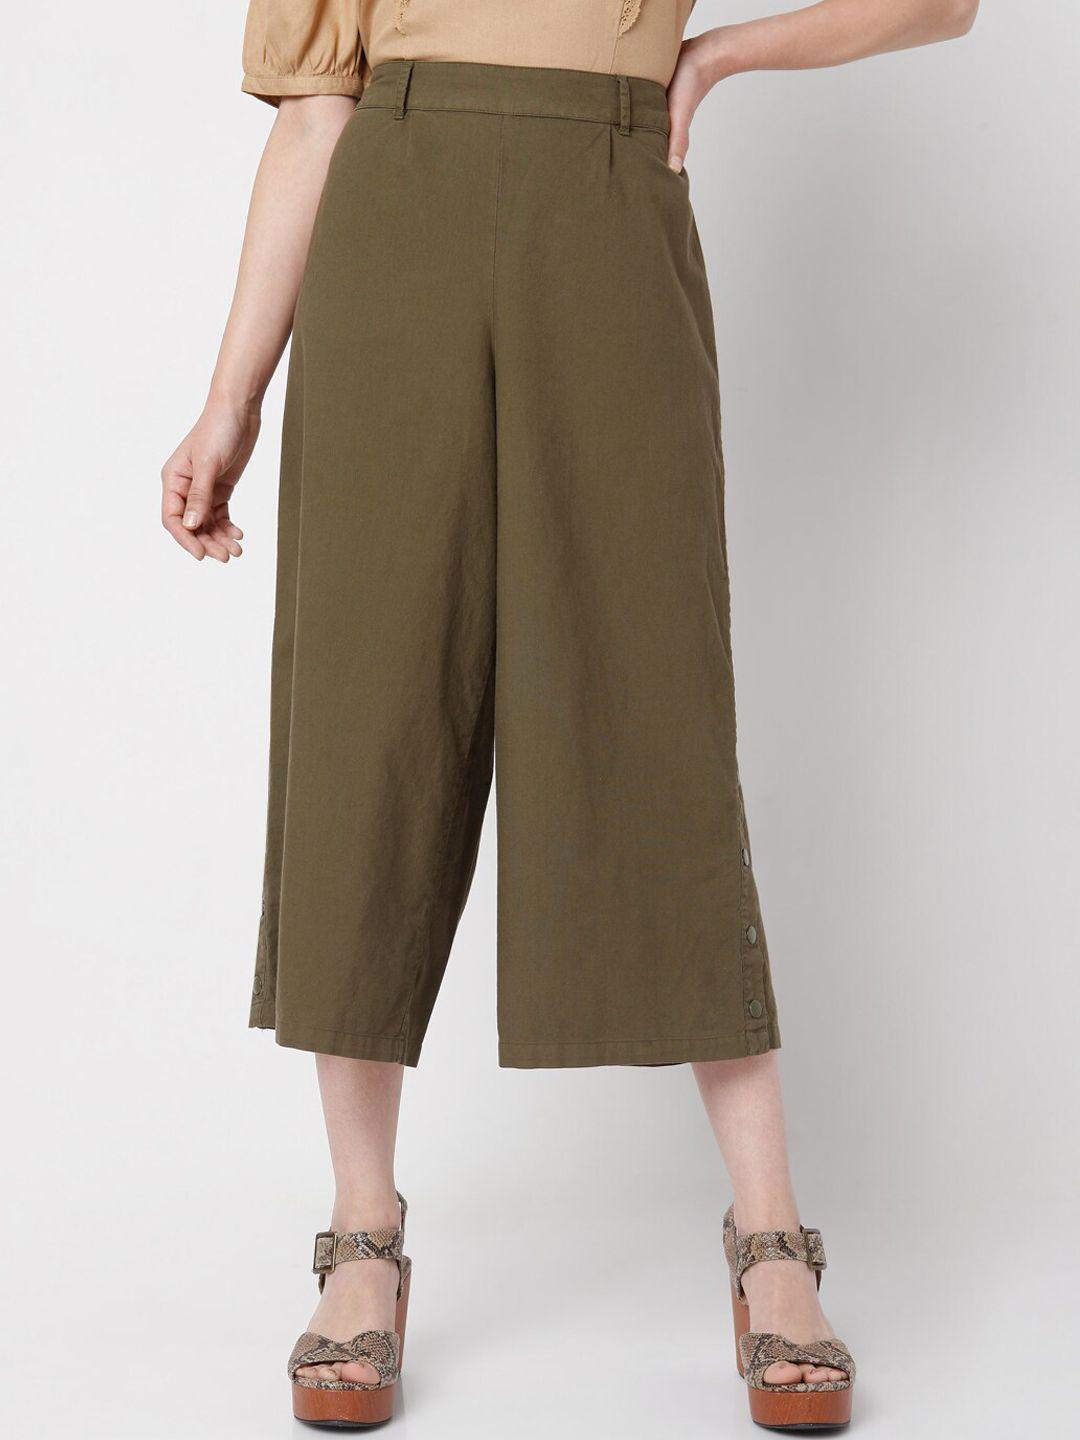 Vero Moda Women Olive Green Flared High-Rise Culottes Trousers